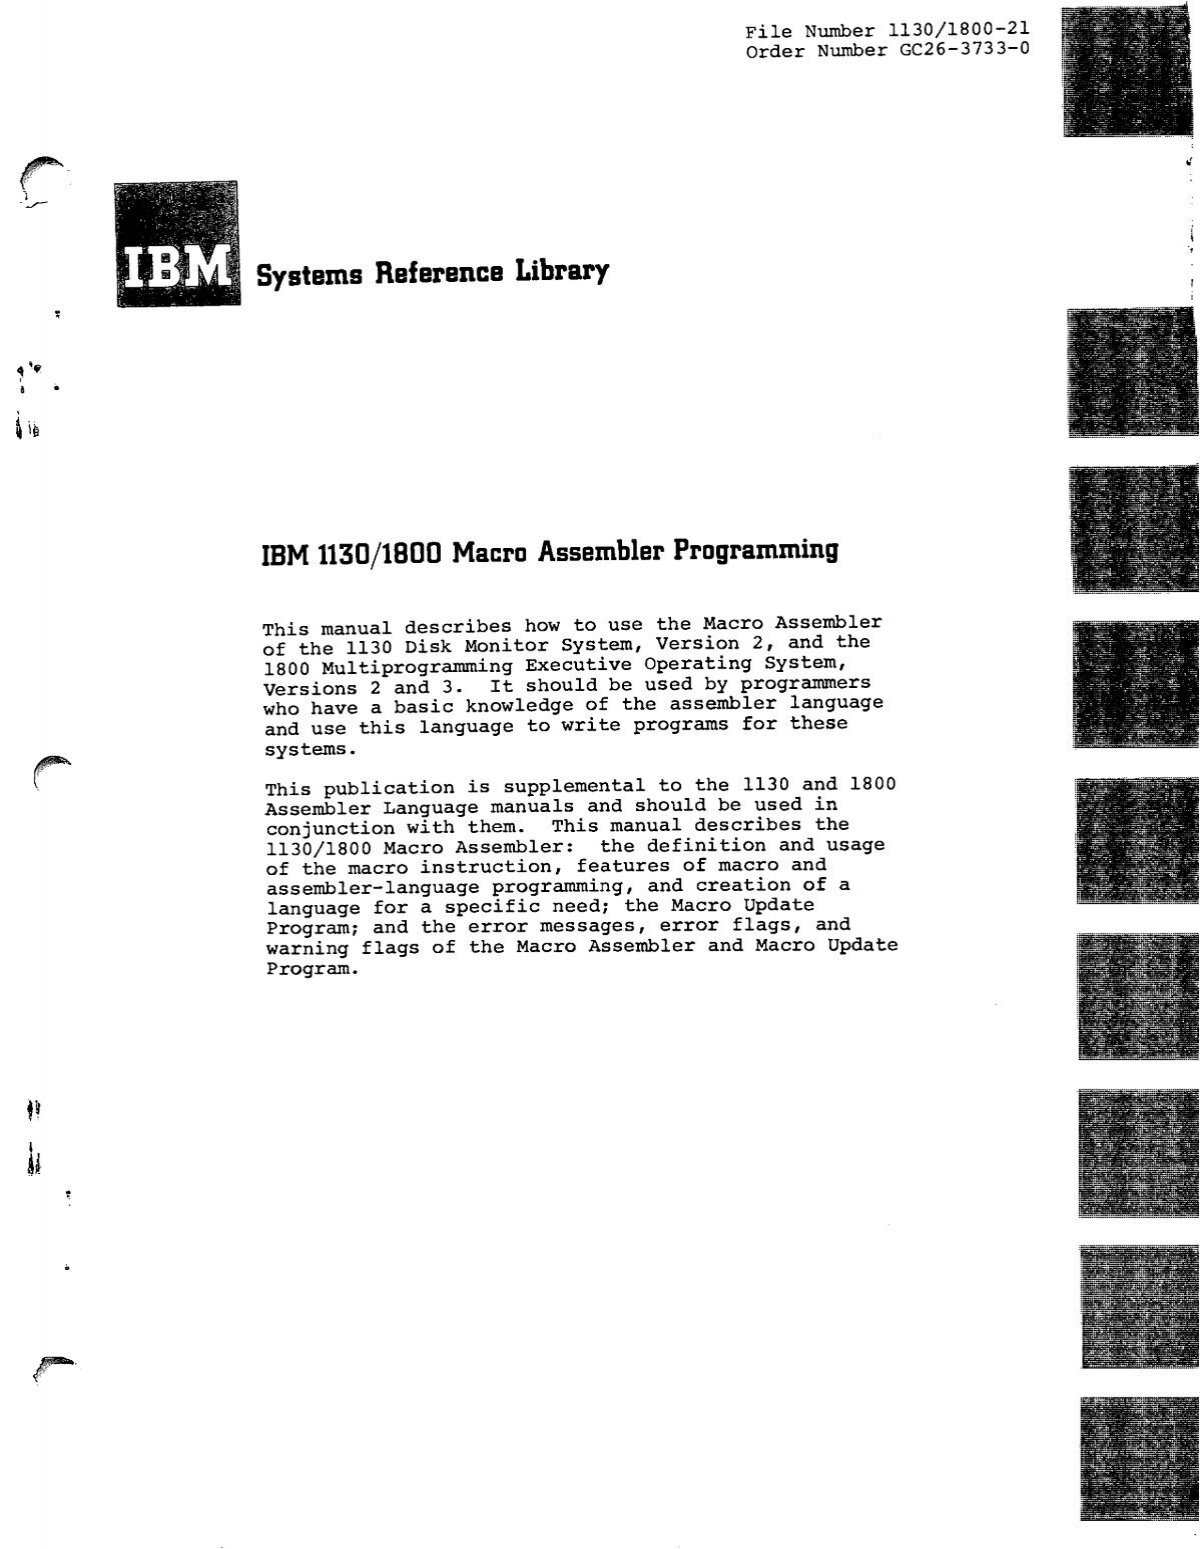 Ibm 1130 1800 Macro Assembler Programming All About The Ibm